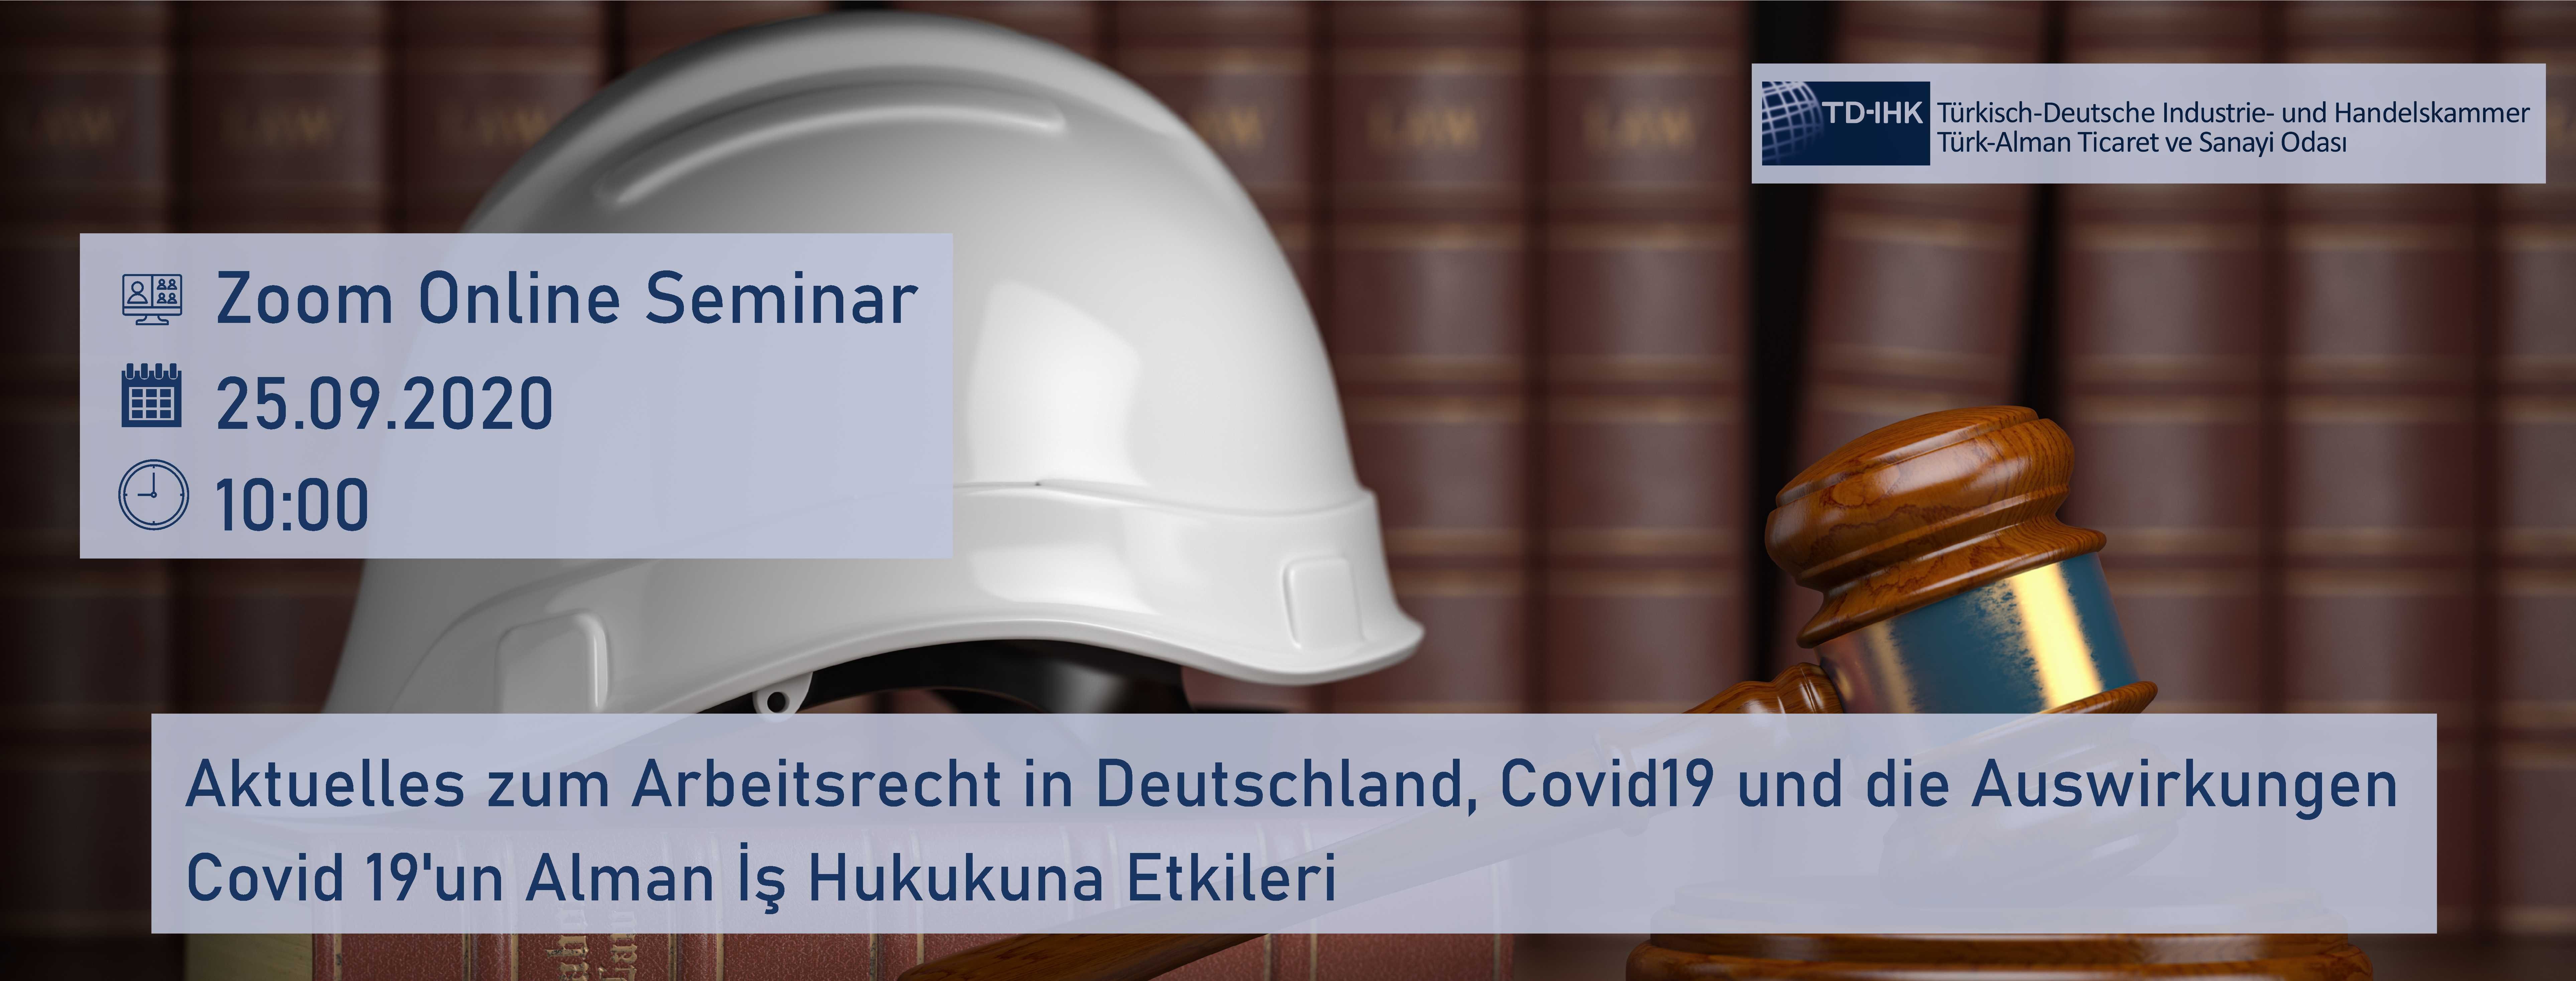 TD-IHK Web Semineri: Covid19’un Alman İş Hukukuna Etkileri